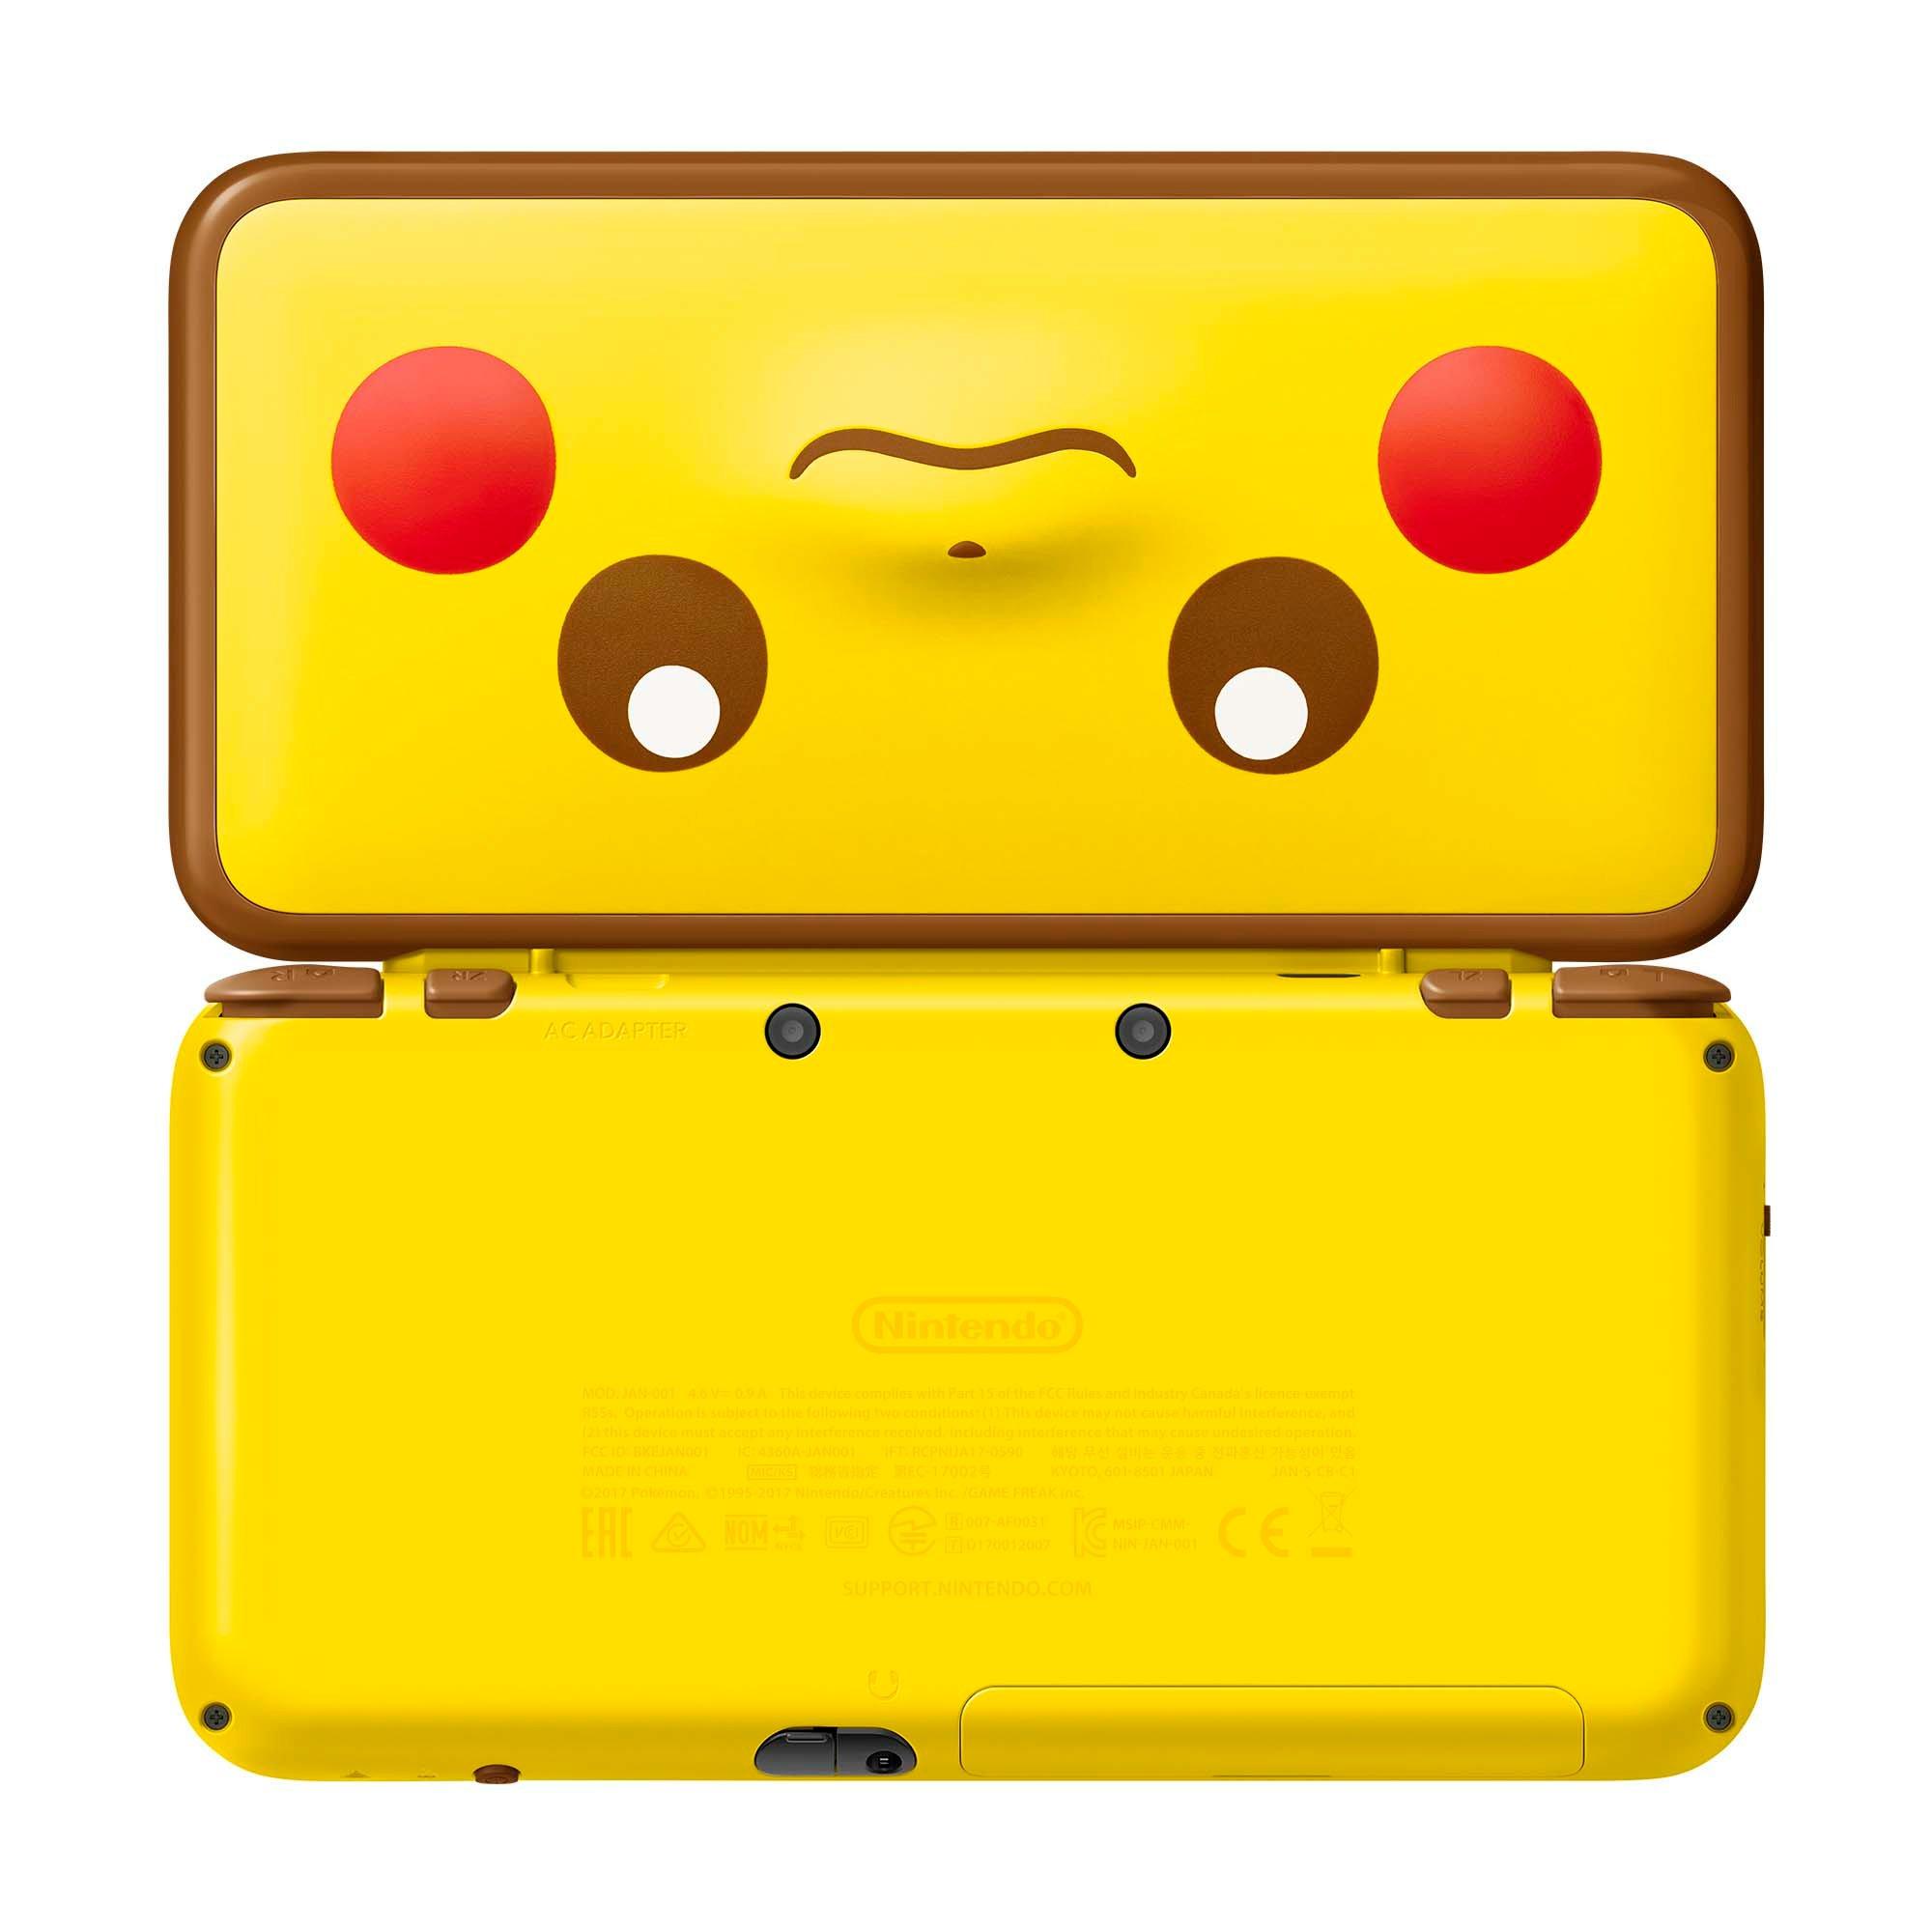 Nintendo 2DS XL Handheld Console Pikachu GameStop Premium Refurbished | GameStop